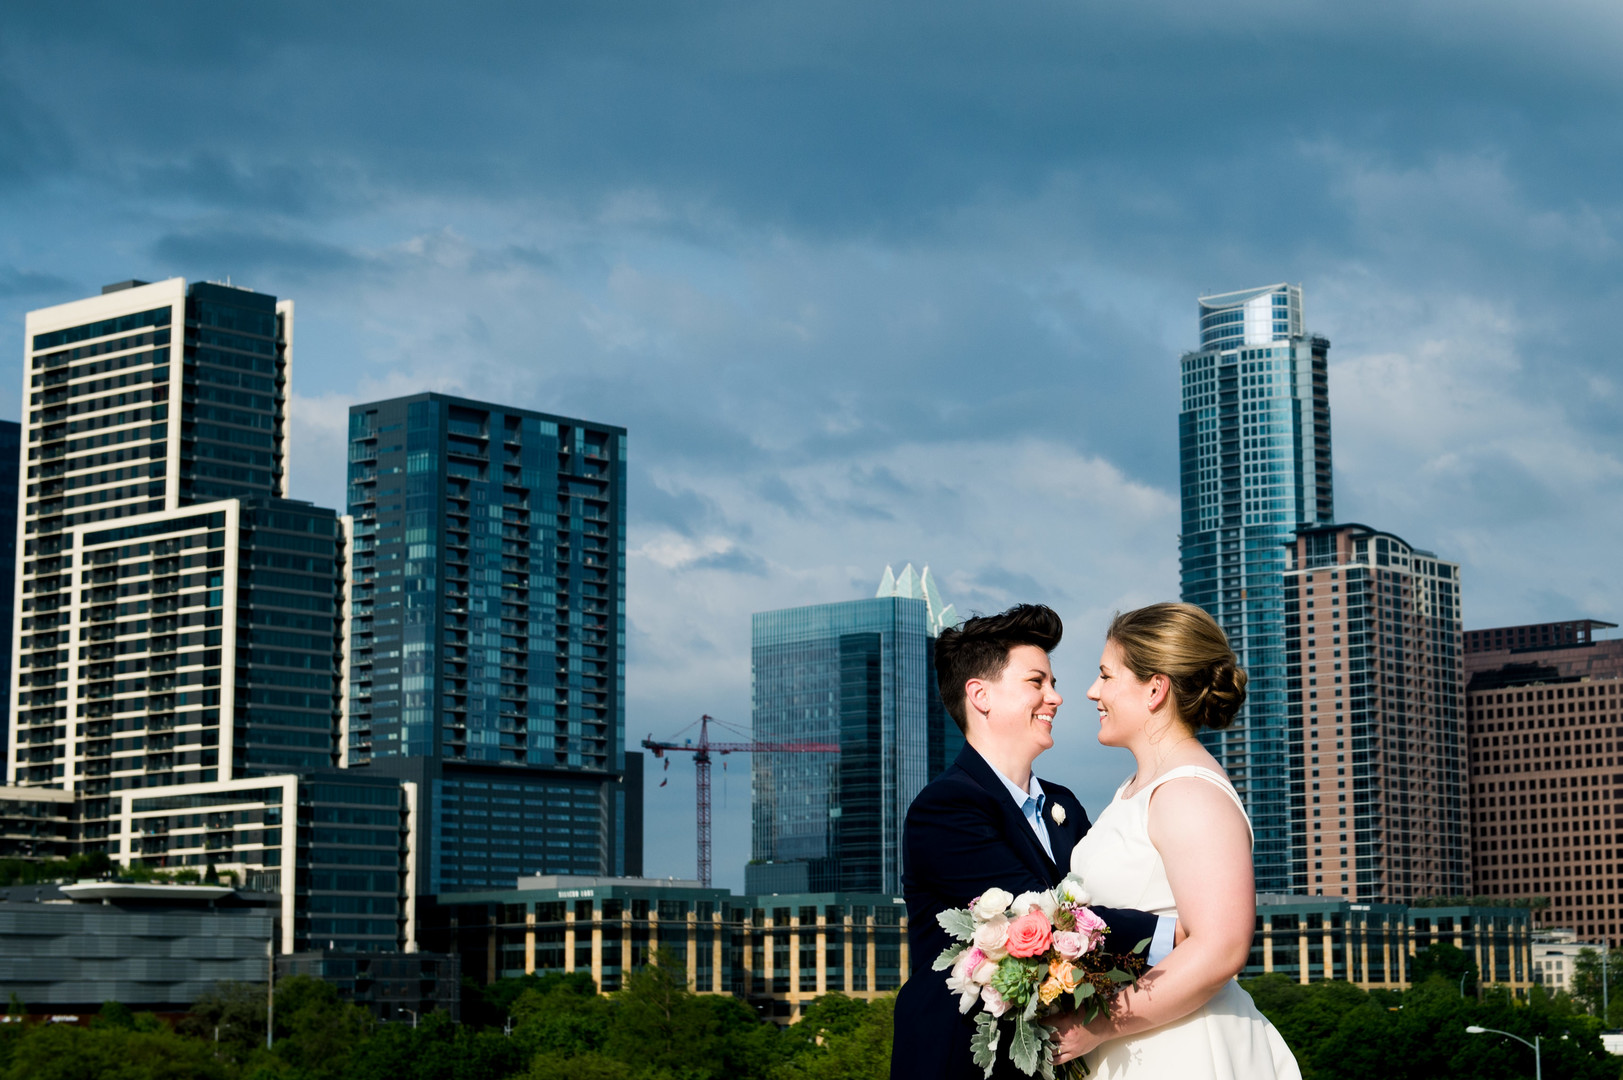 Intimate spring wedding at Butler Park in Austin, Texas LGBTQ+ weddings lesbian wedding two brides white dress navy blue suit skyline